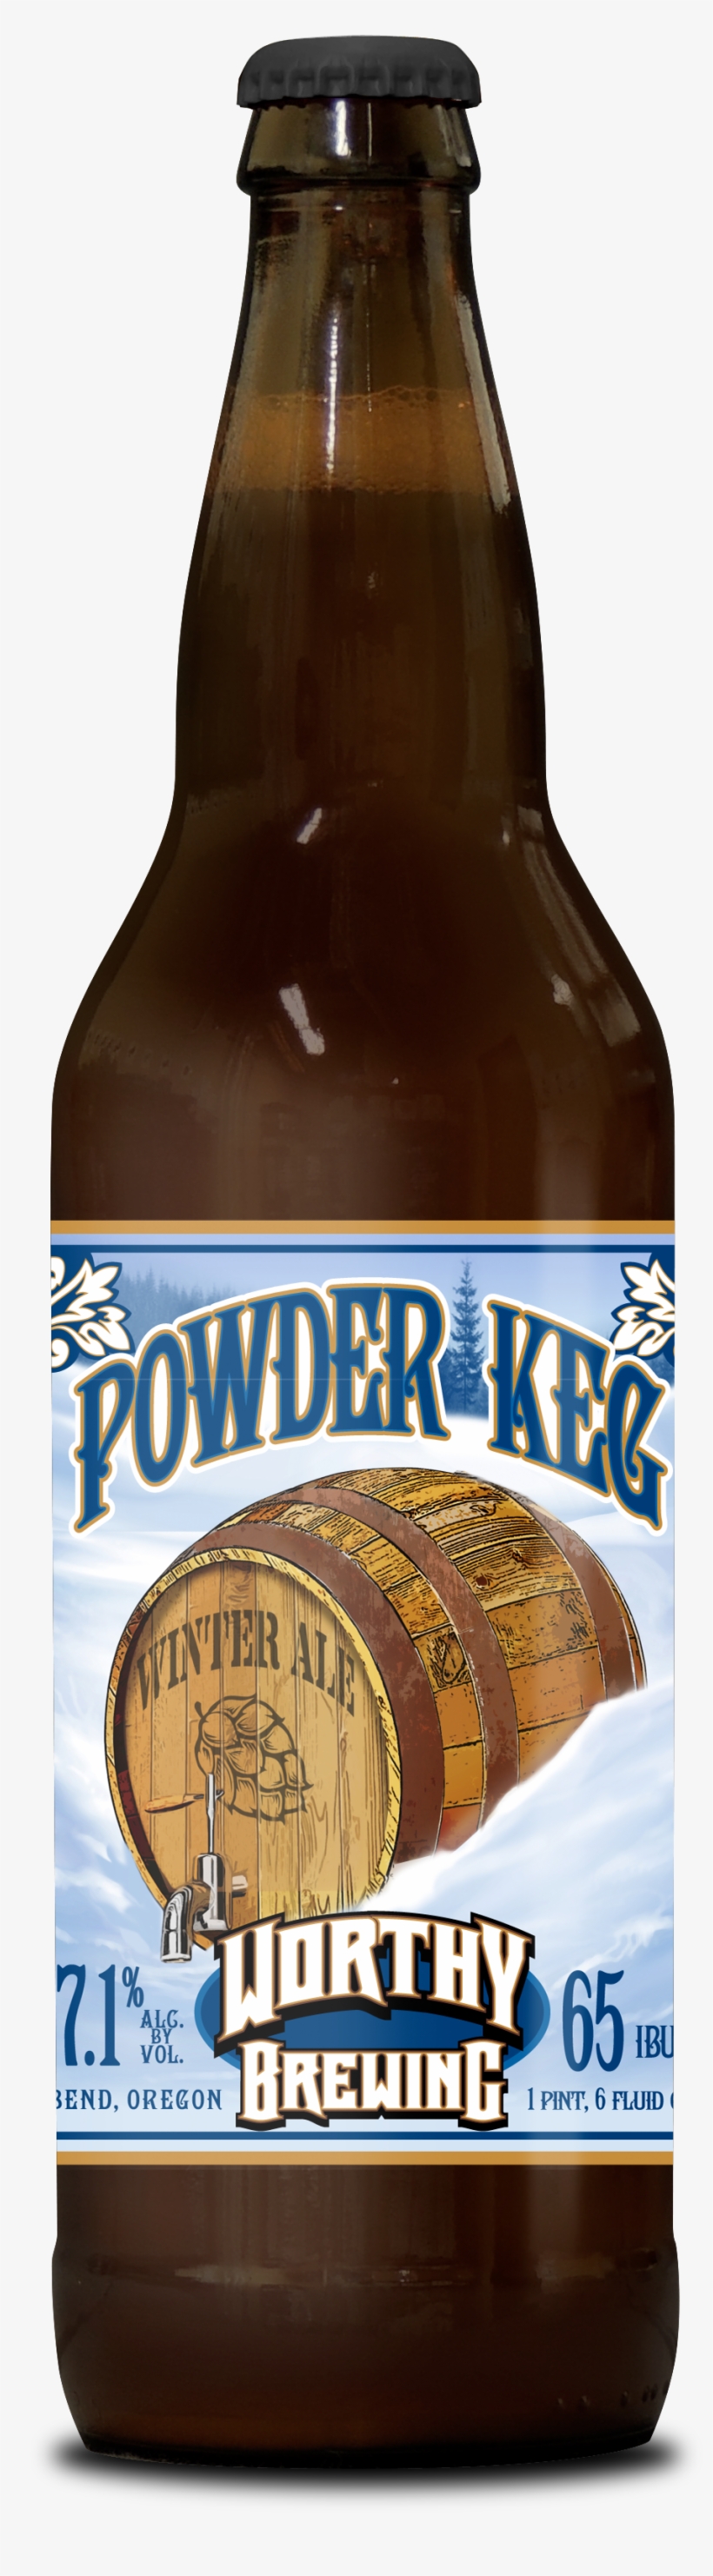 Worthy Brewing Releases Powder Keg Winter Ale - Beer Bottle, transparent png #523891